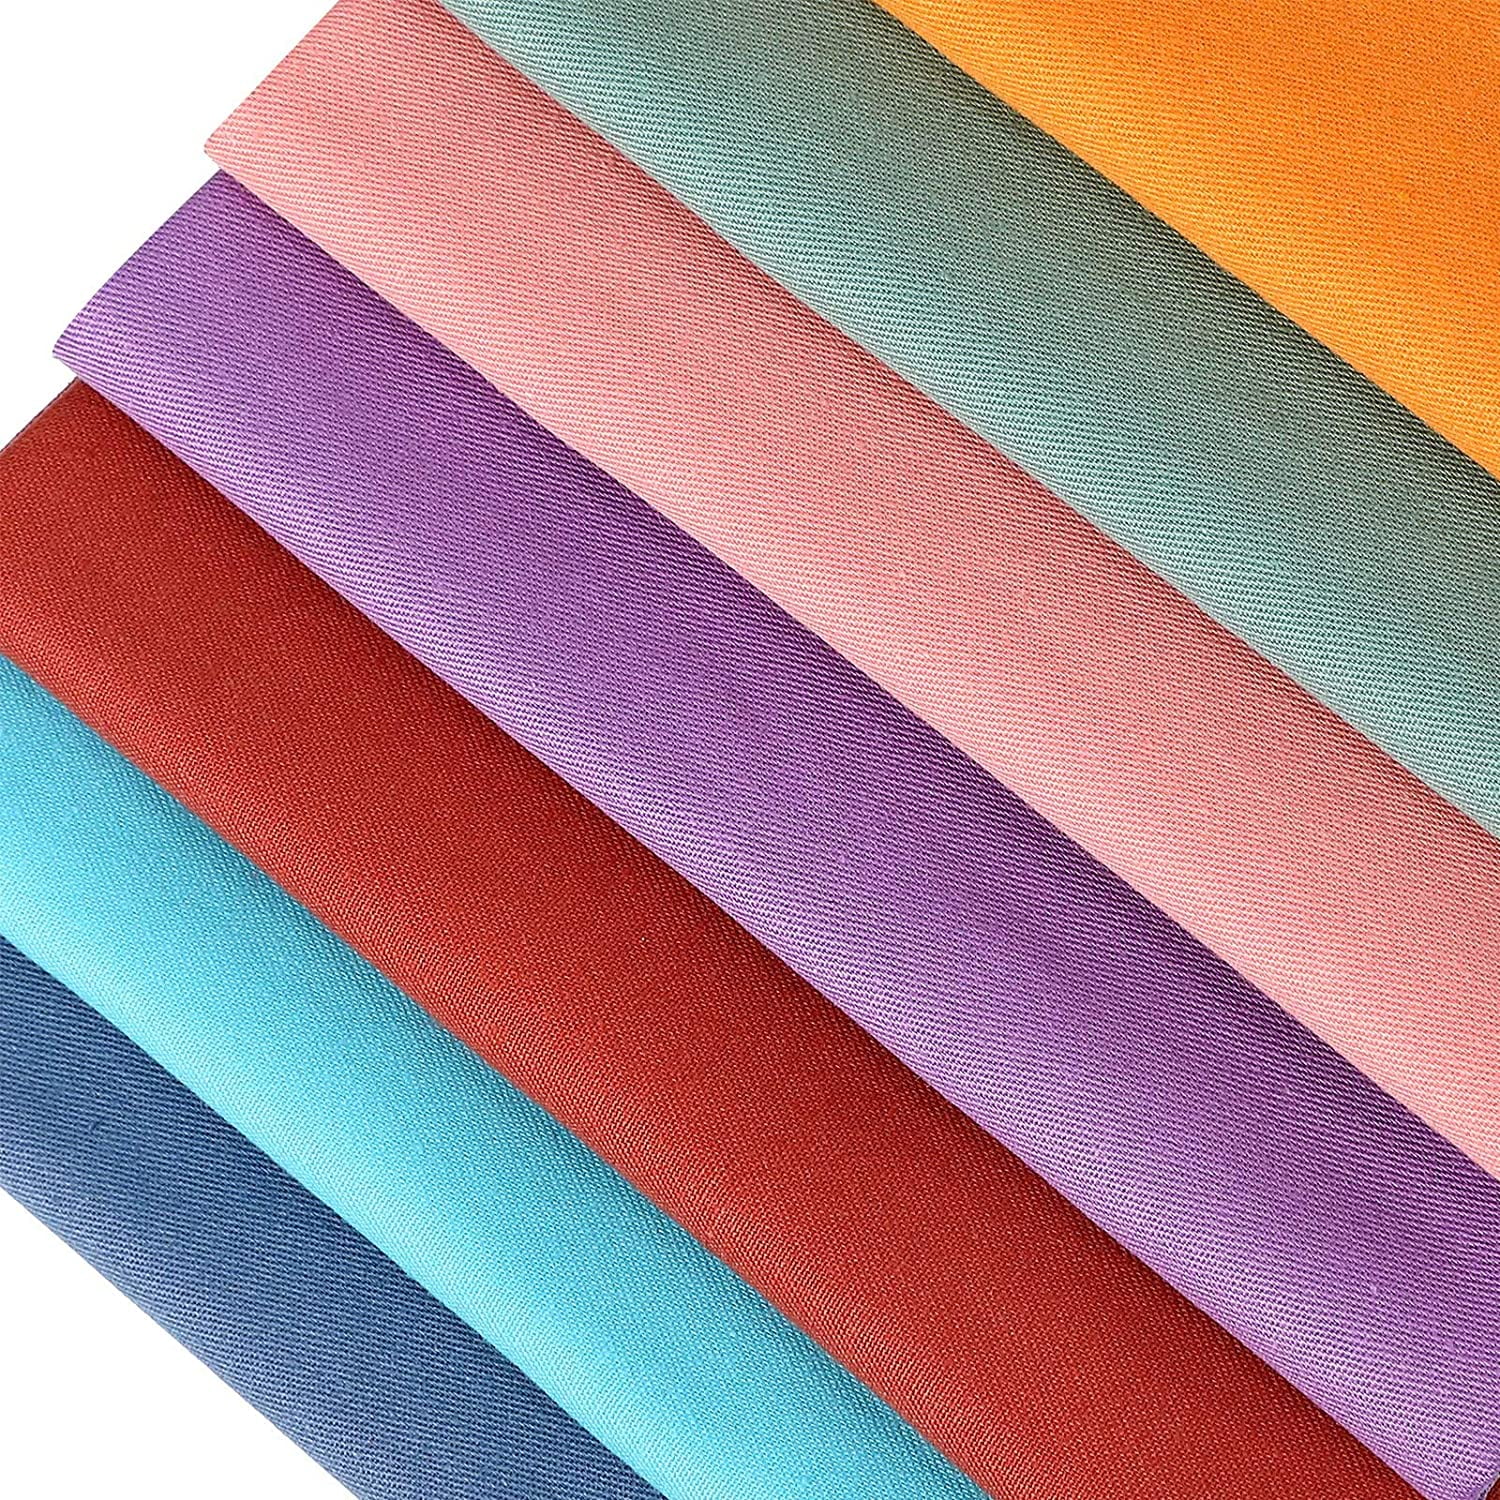 12pieces Quilting fabrics set assortment of mix colour fat 1/8th bundle